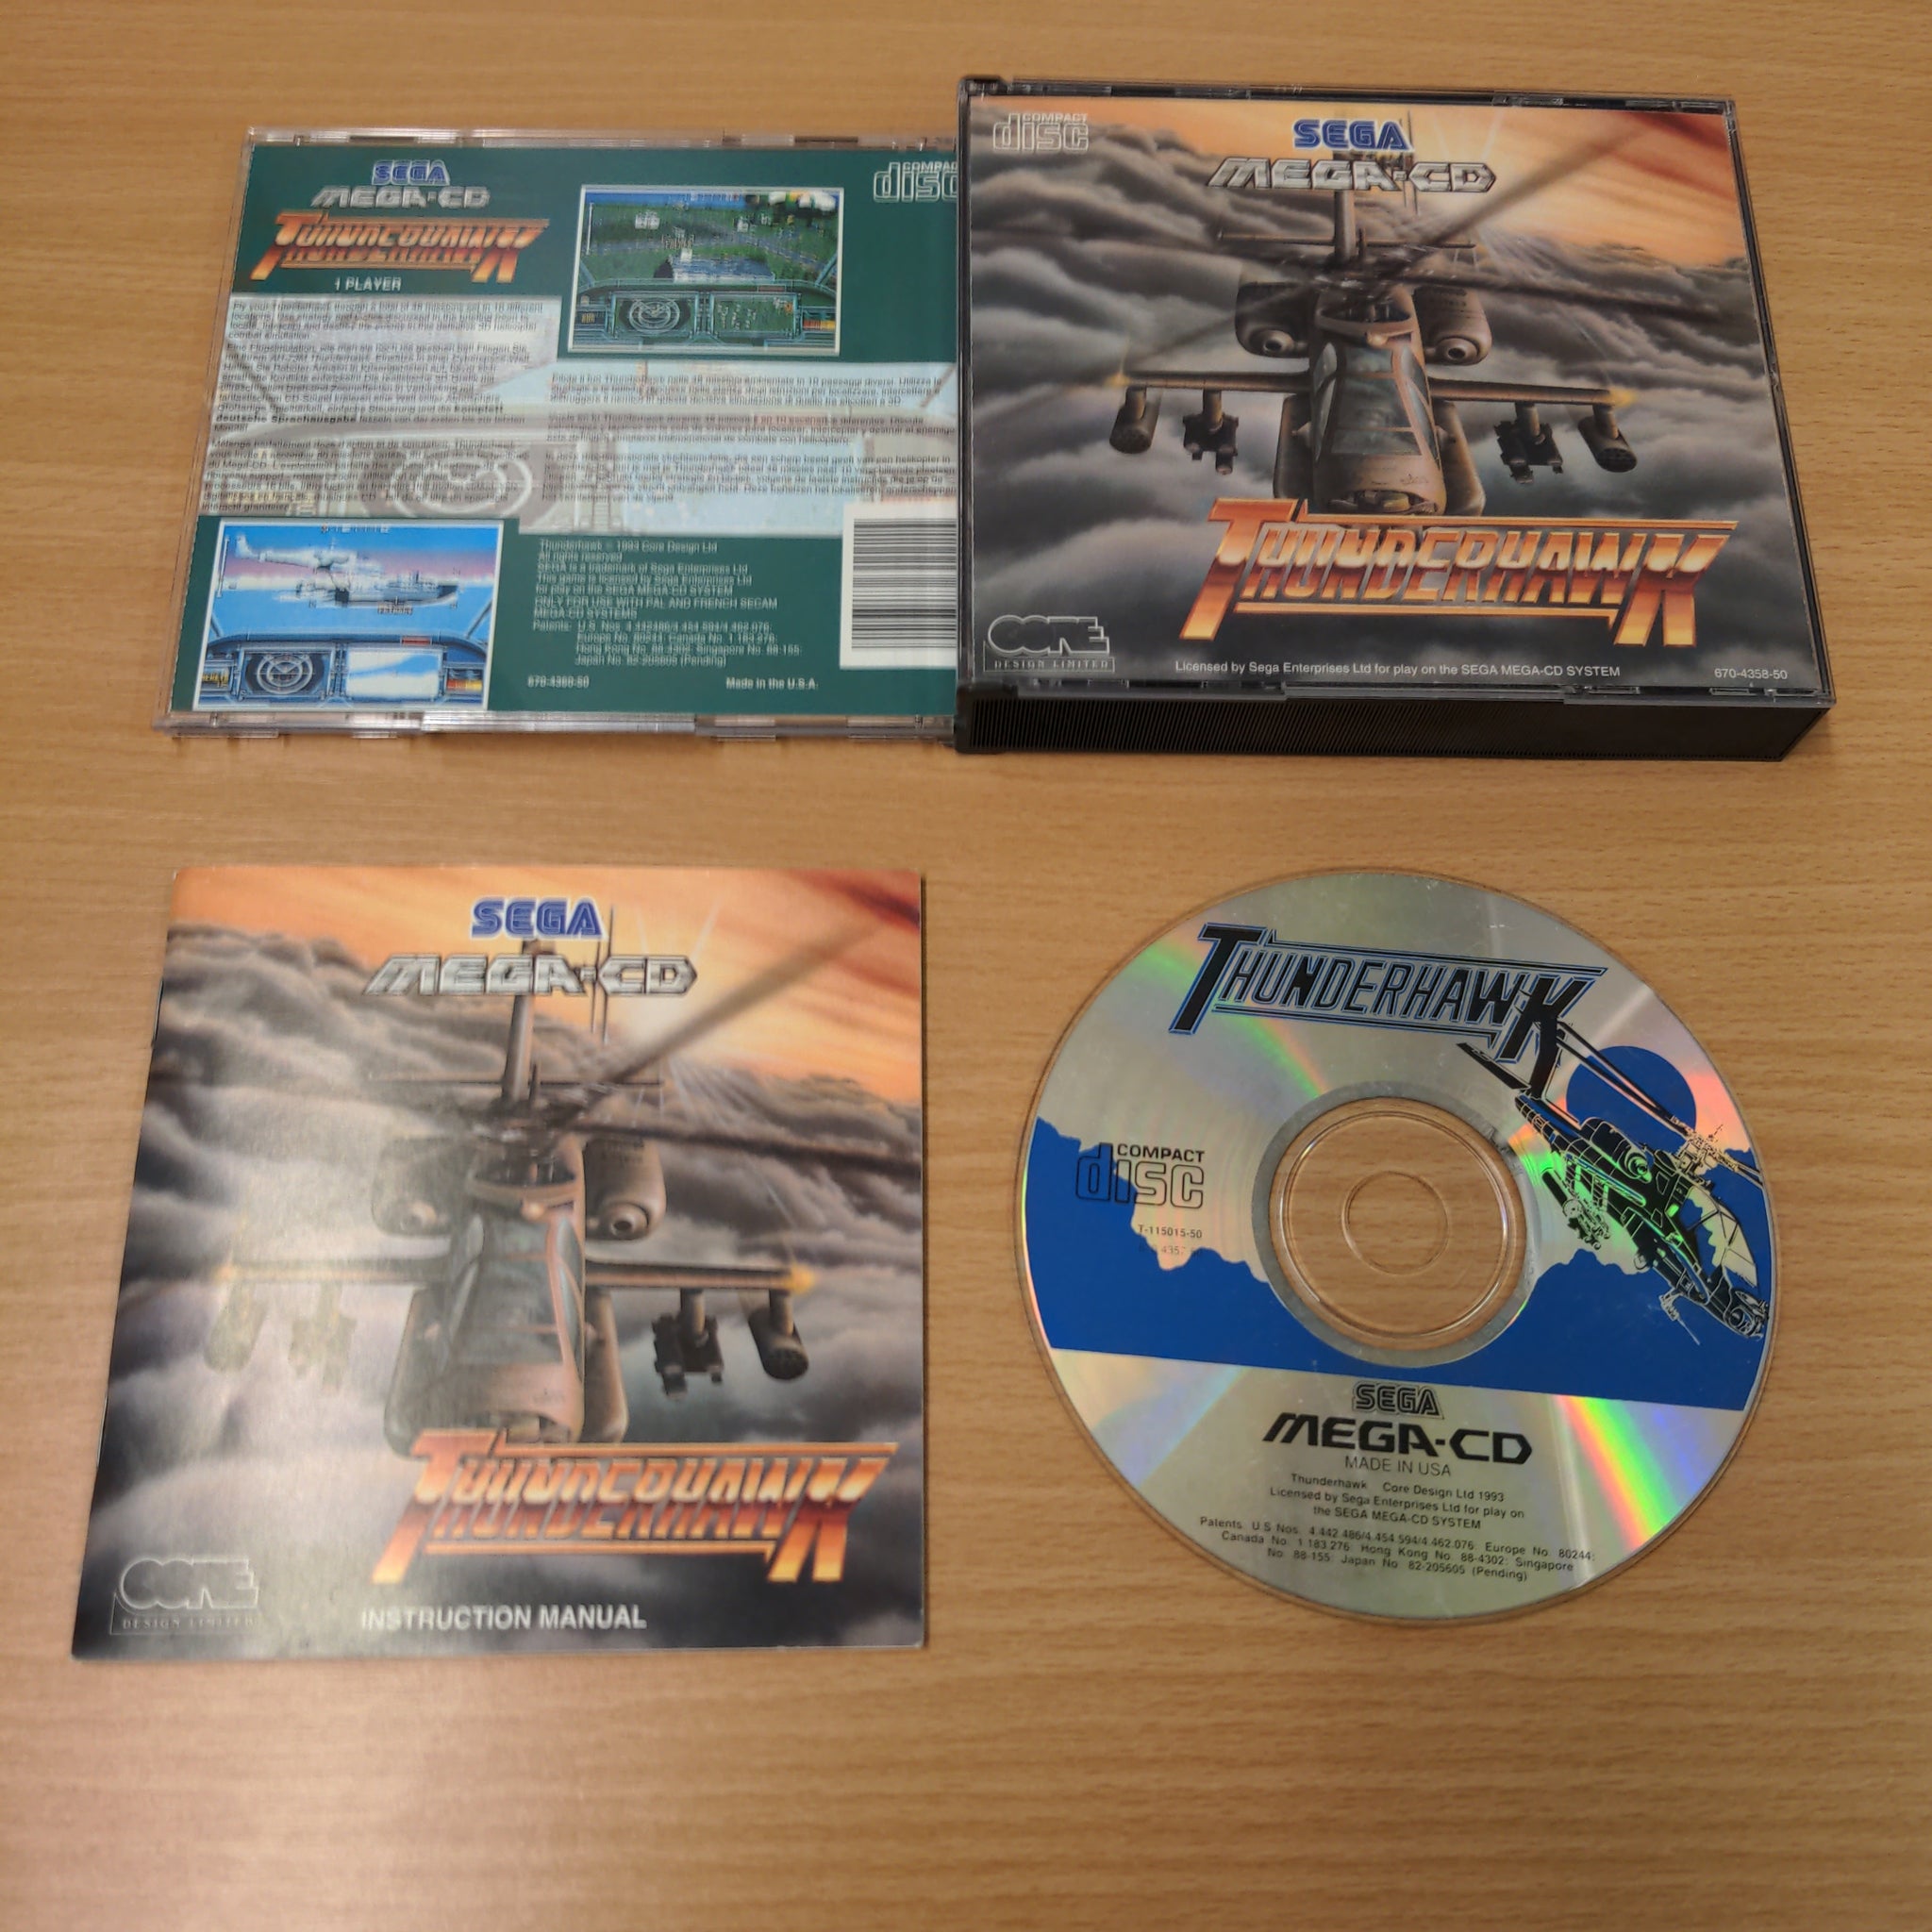 Thunderhawk Sega Mega-CD game